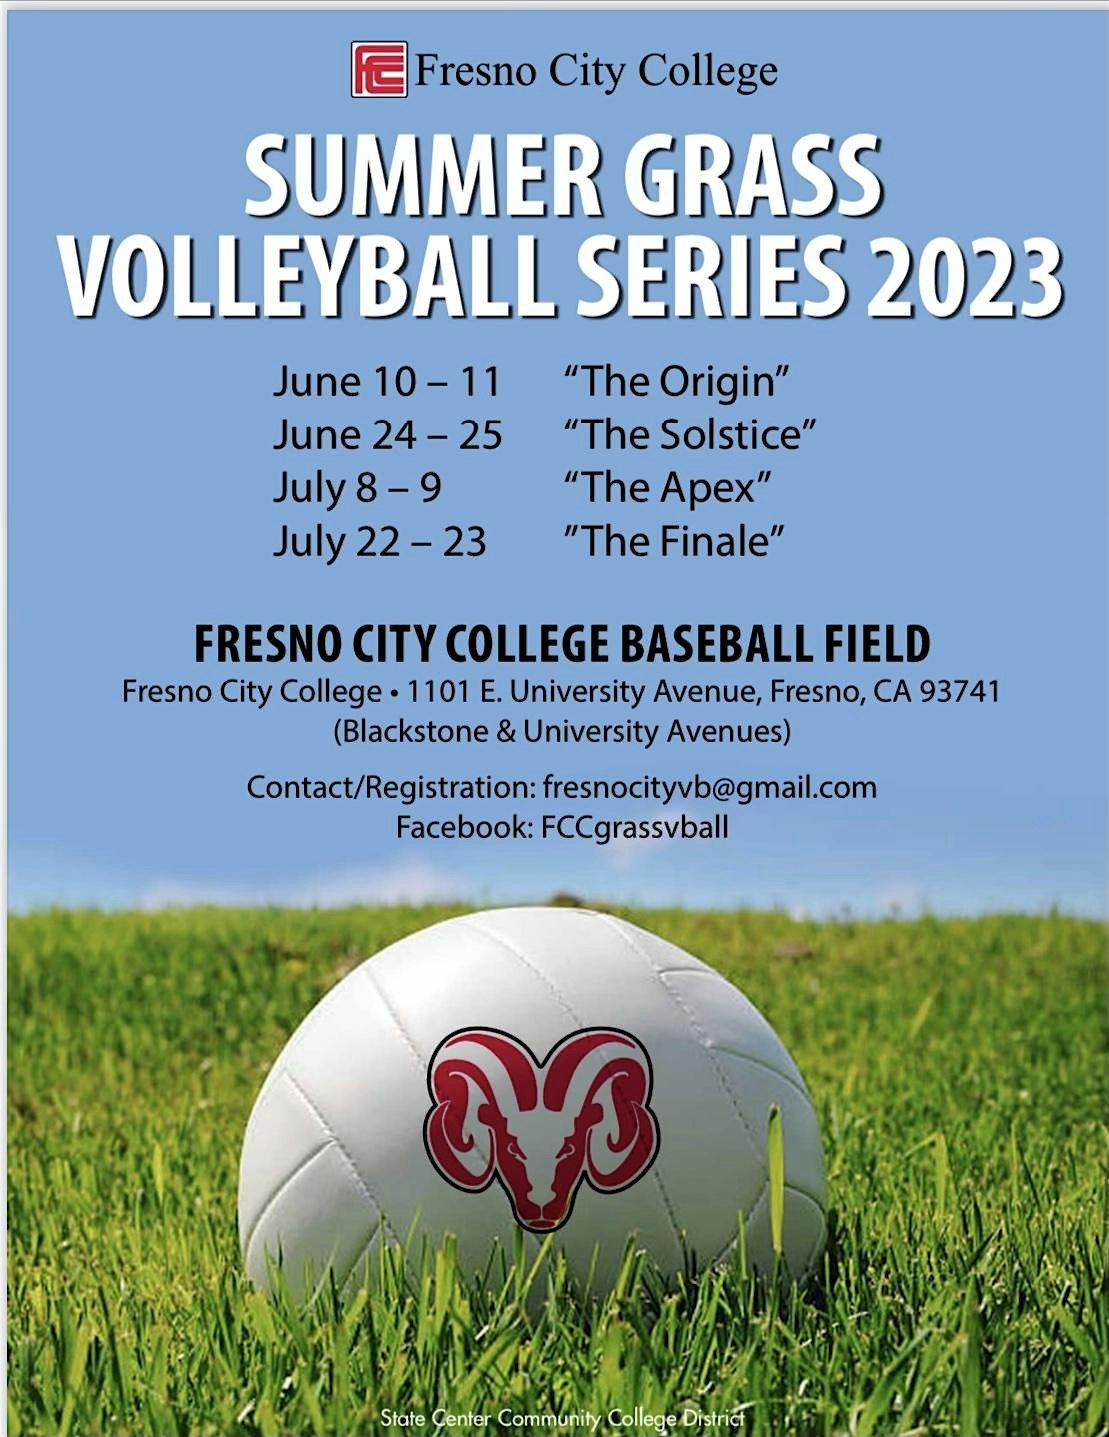 Summer Grass Volleyball Series - "The Finale"